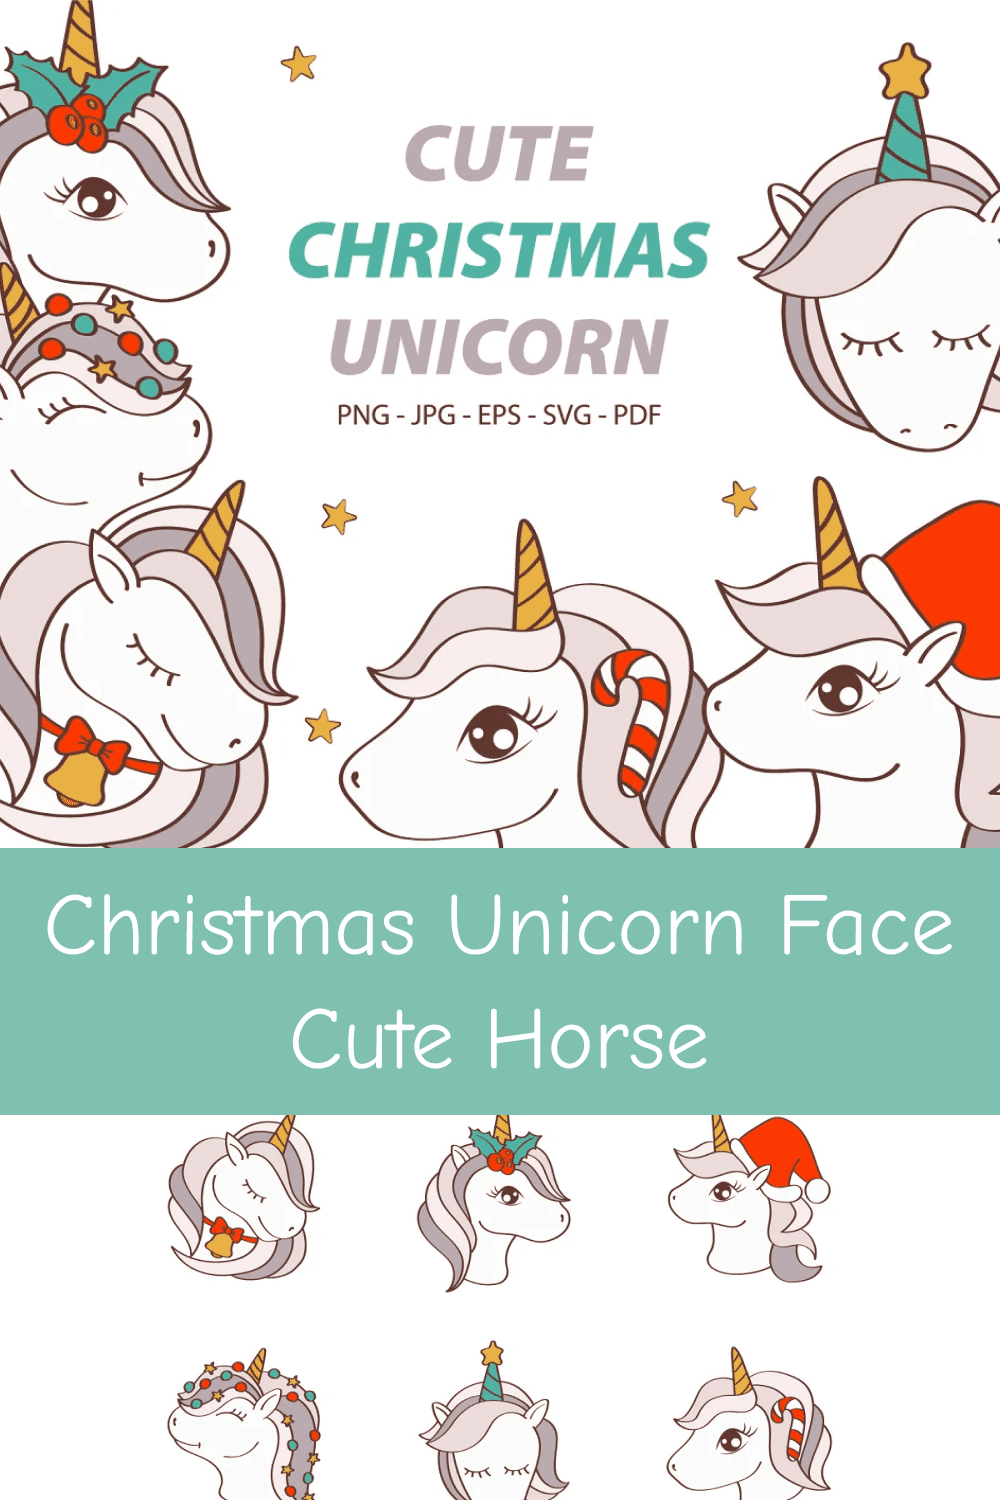 Christmas Unicorn Face, Cute Horse.